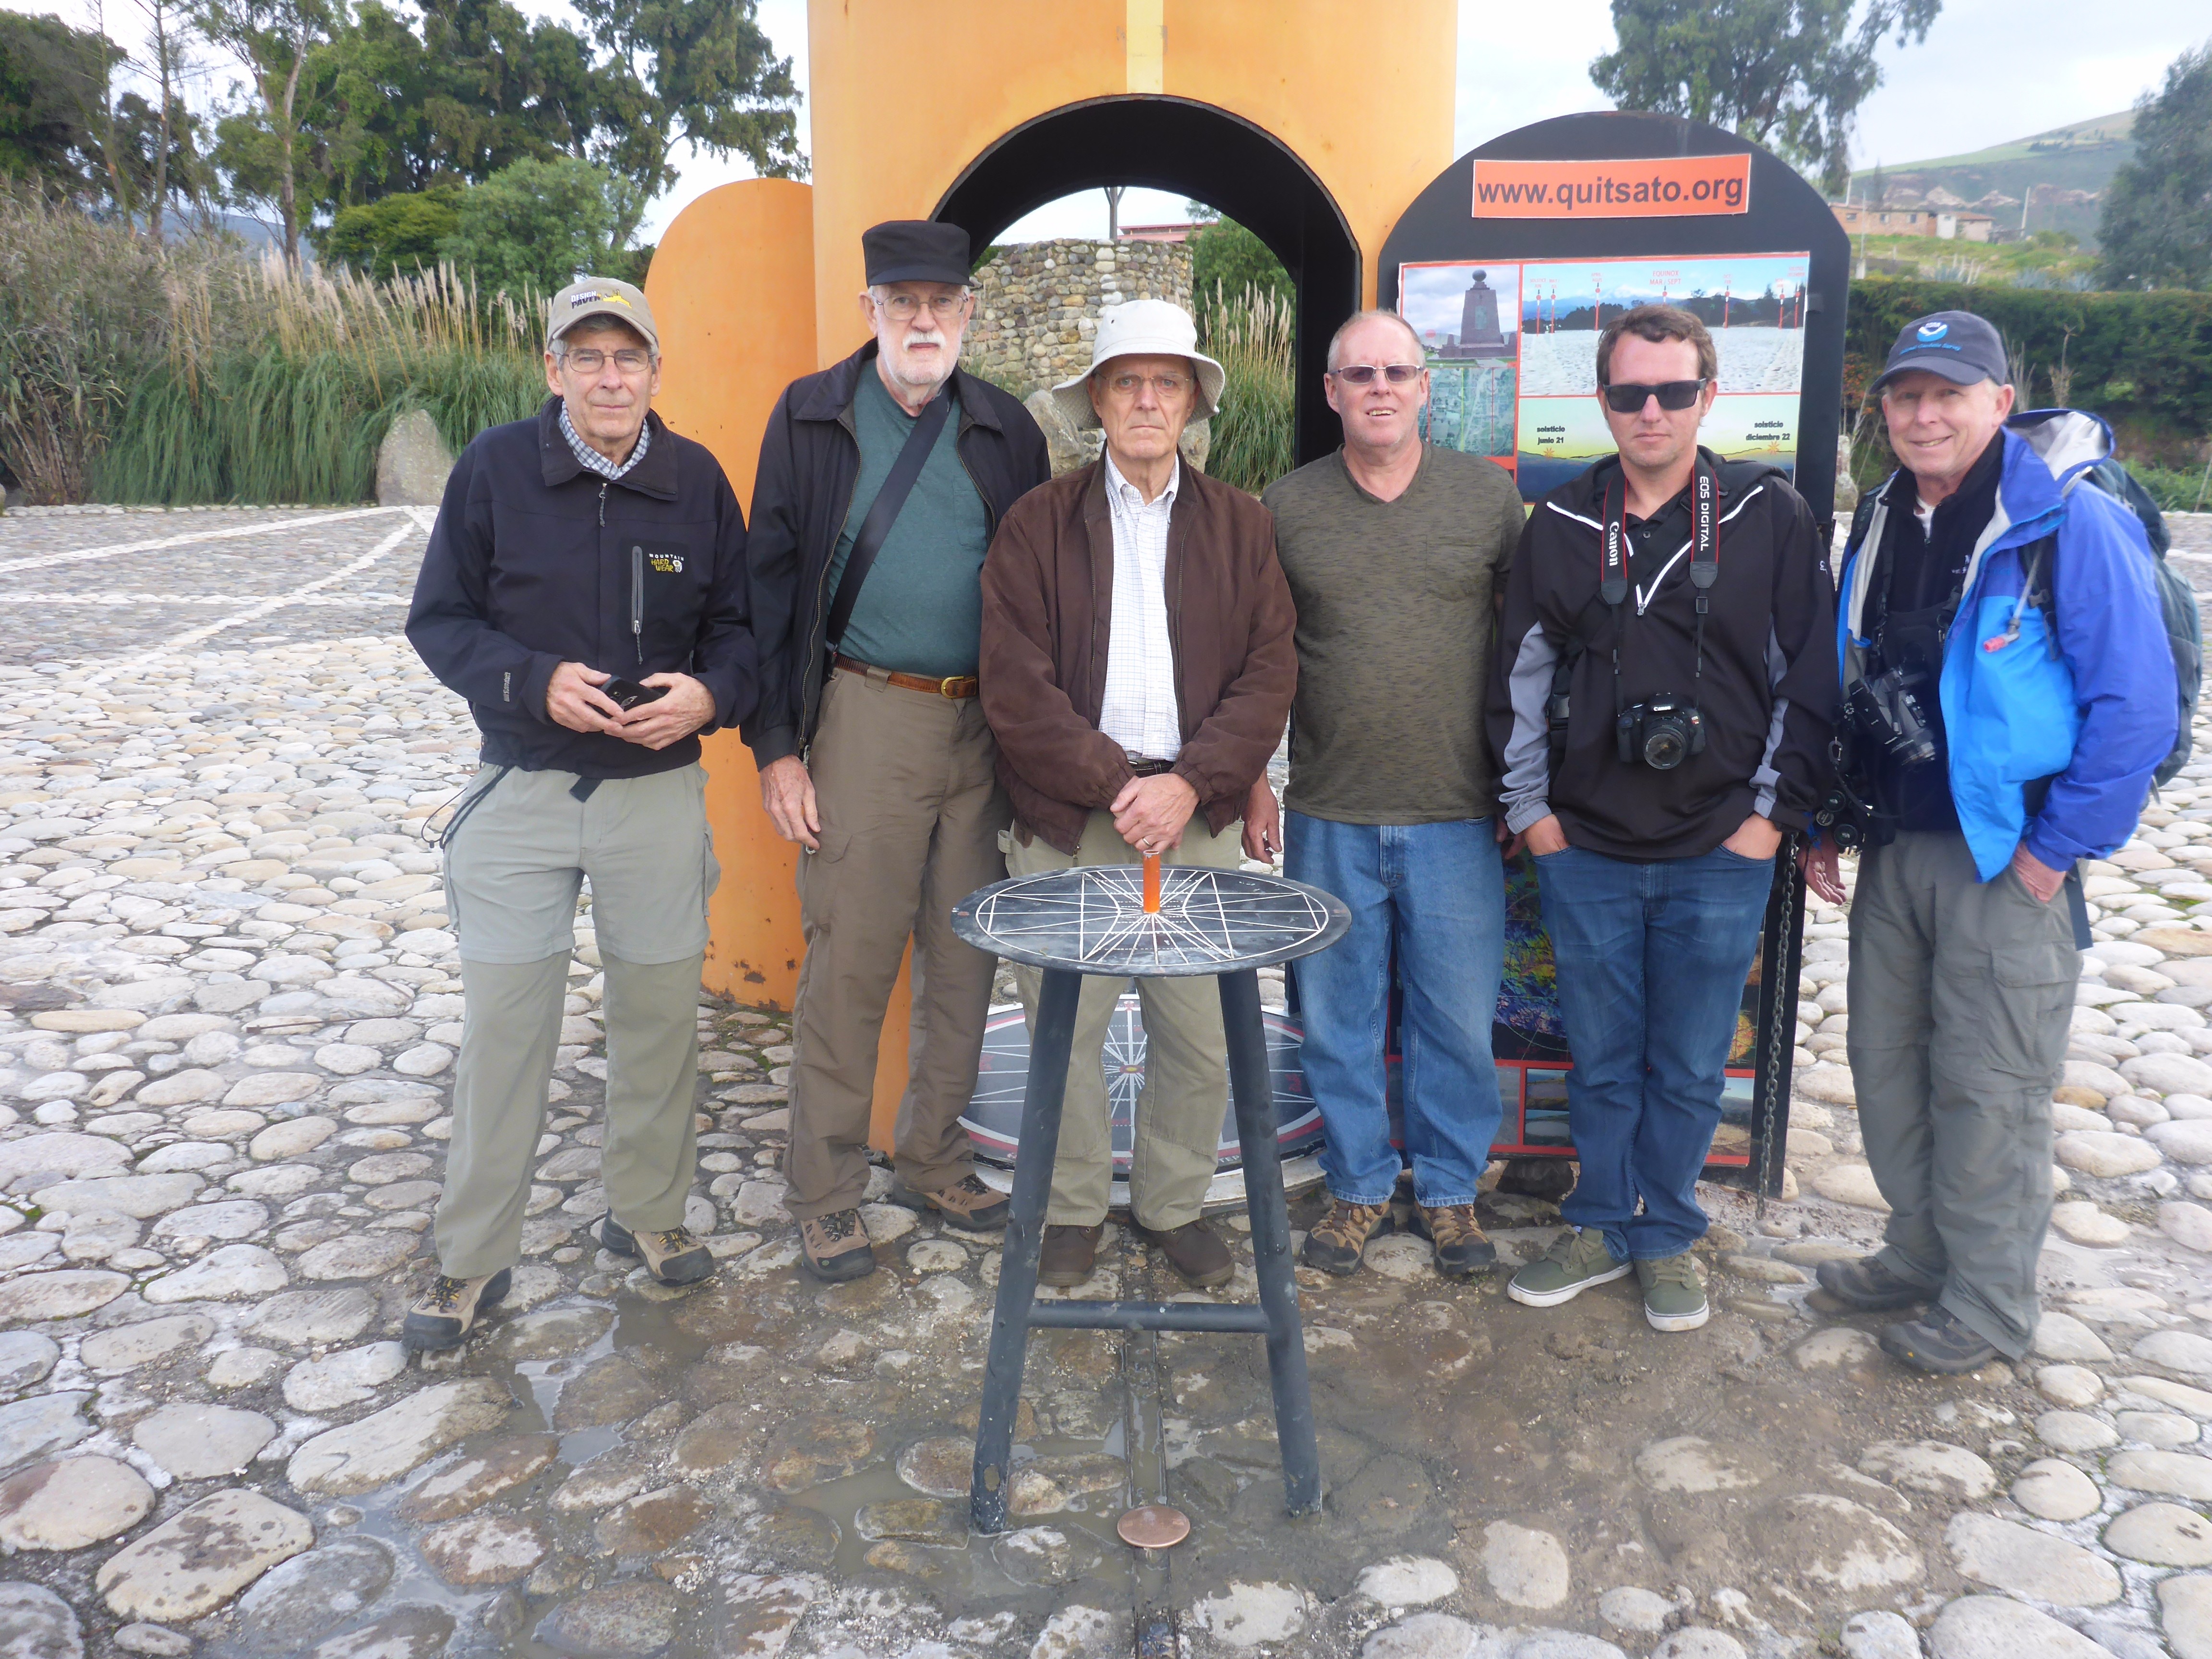 Ken Rich, John M, John H, Joe, and Mark at the Quitsato sundial.